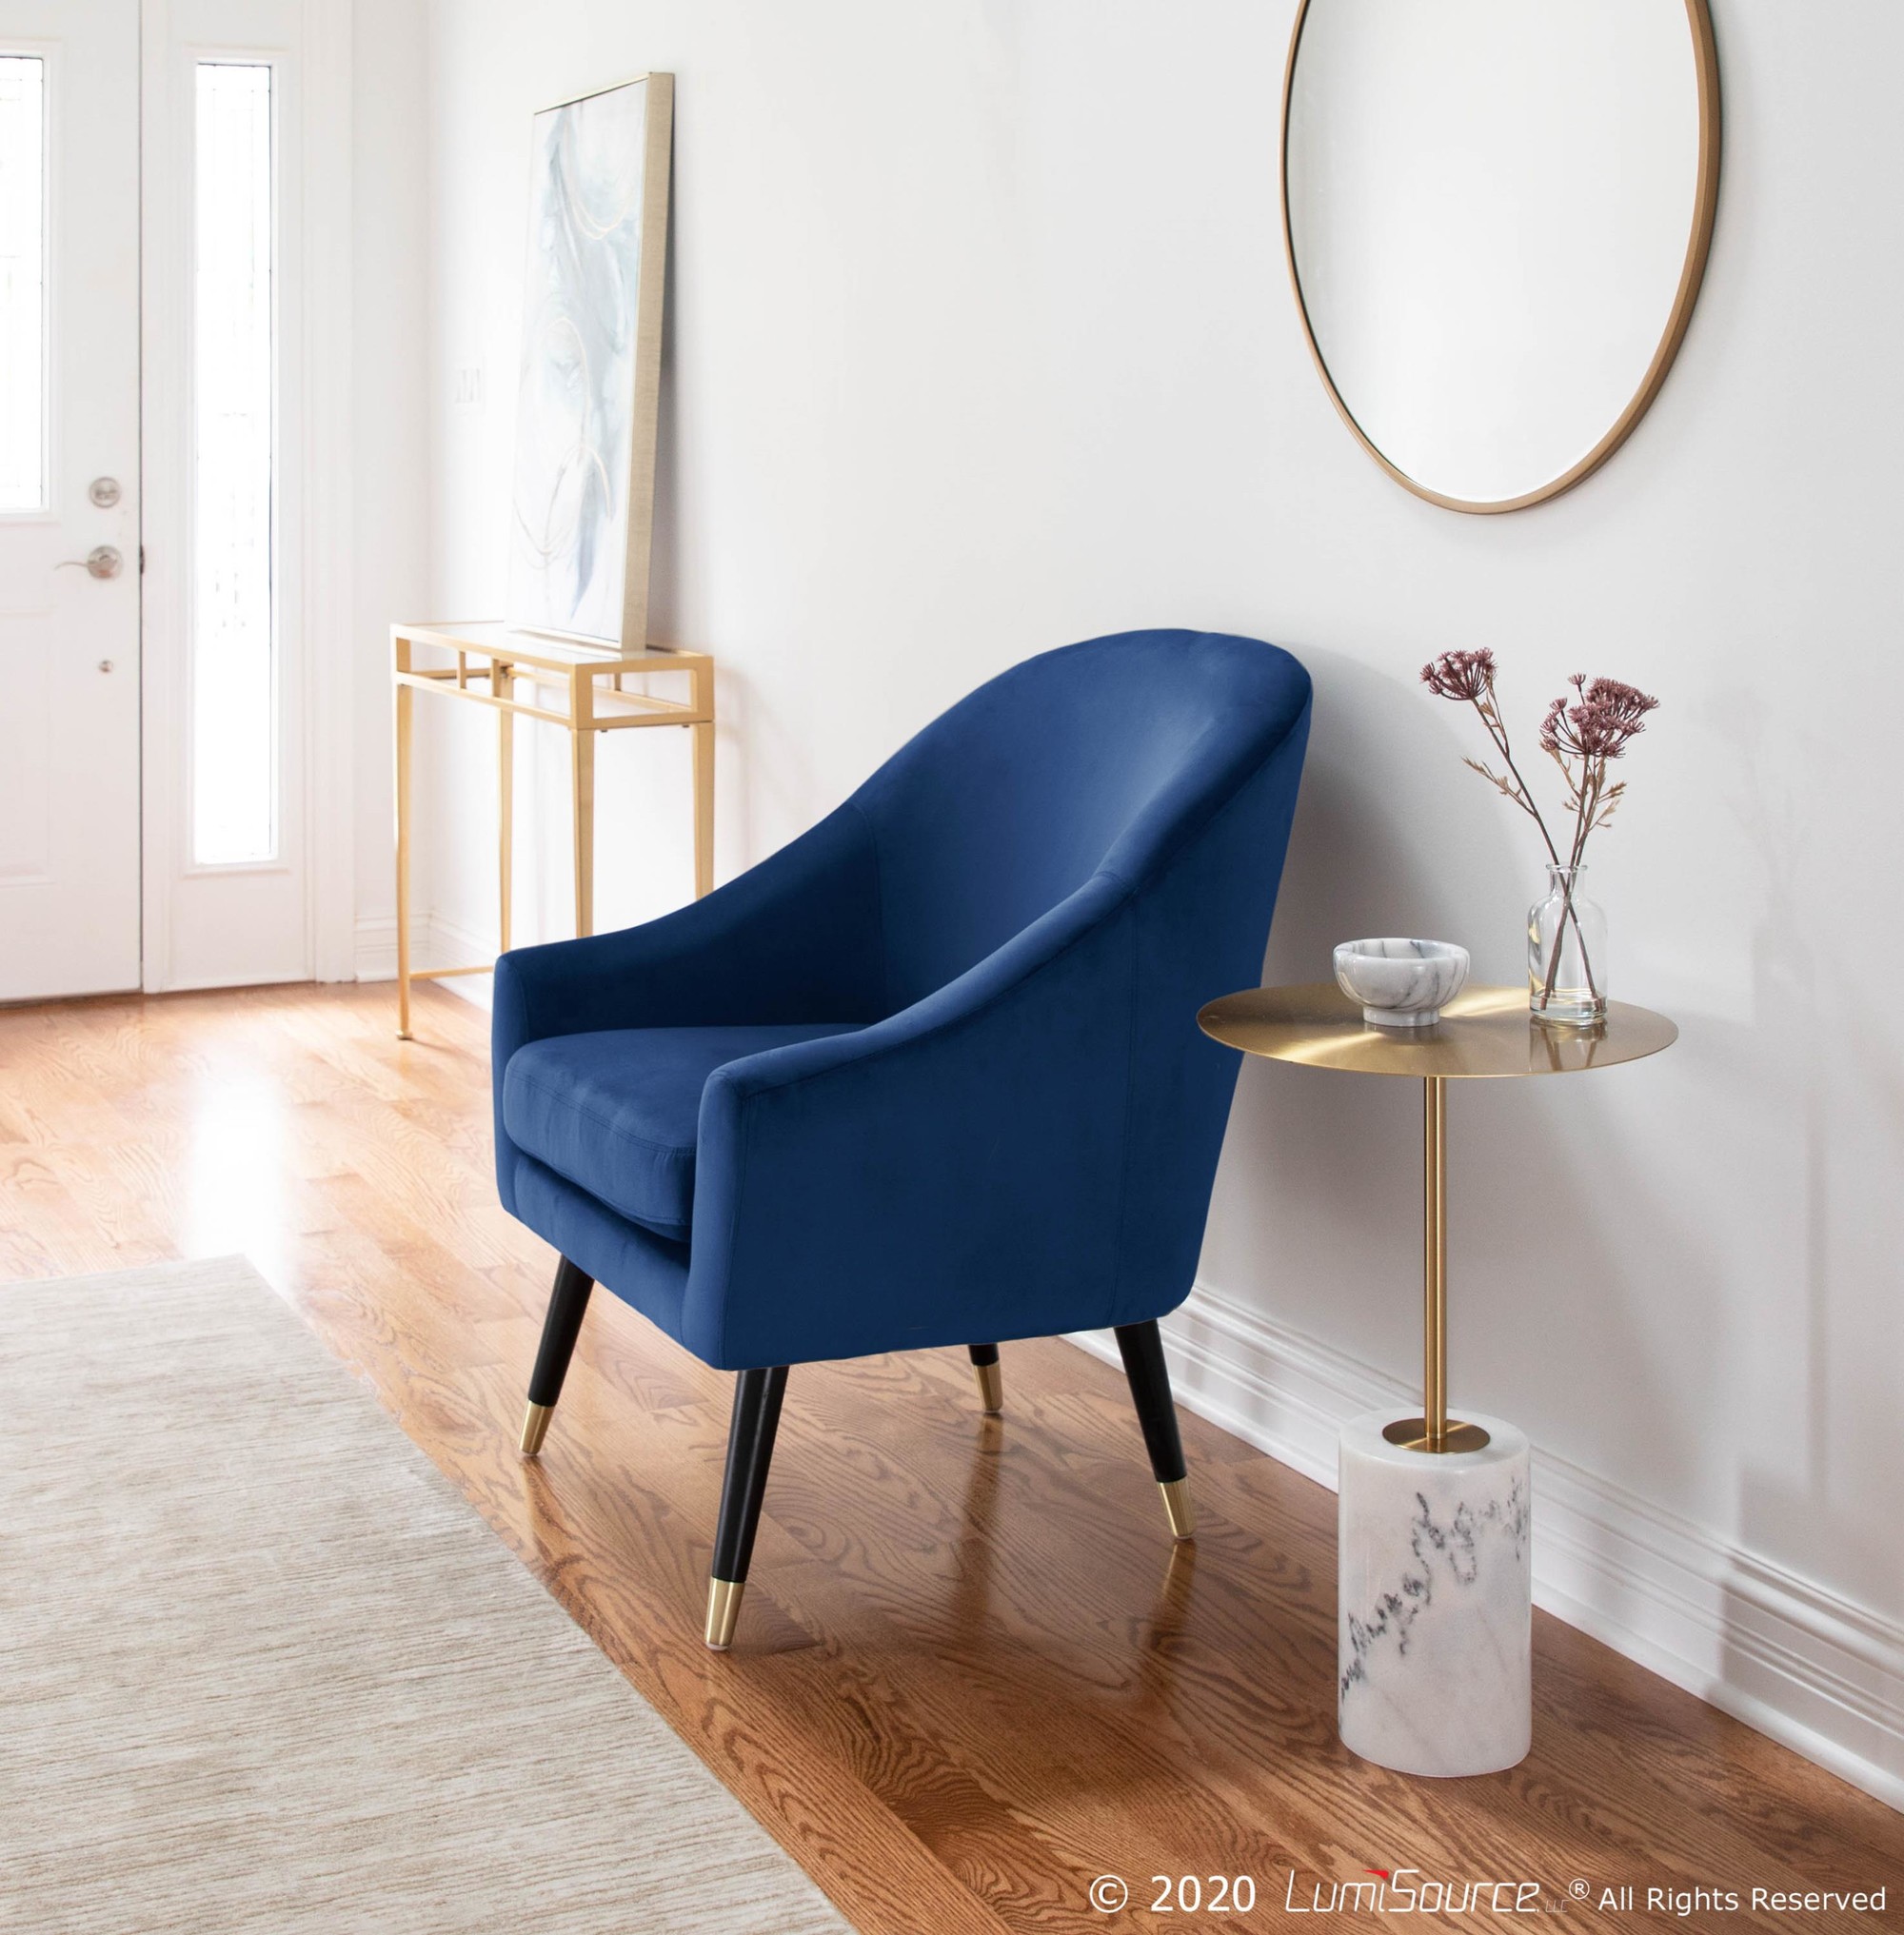 Matisse Accent Chair